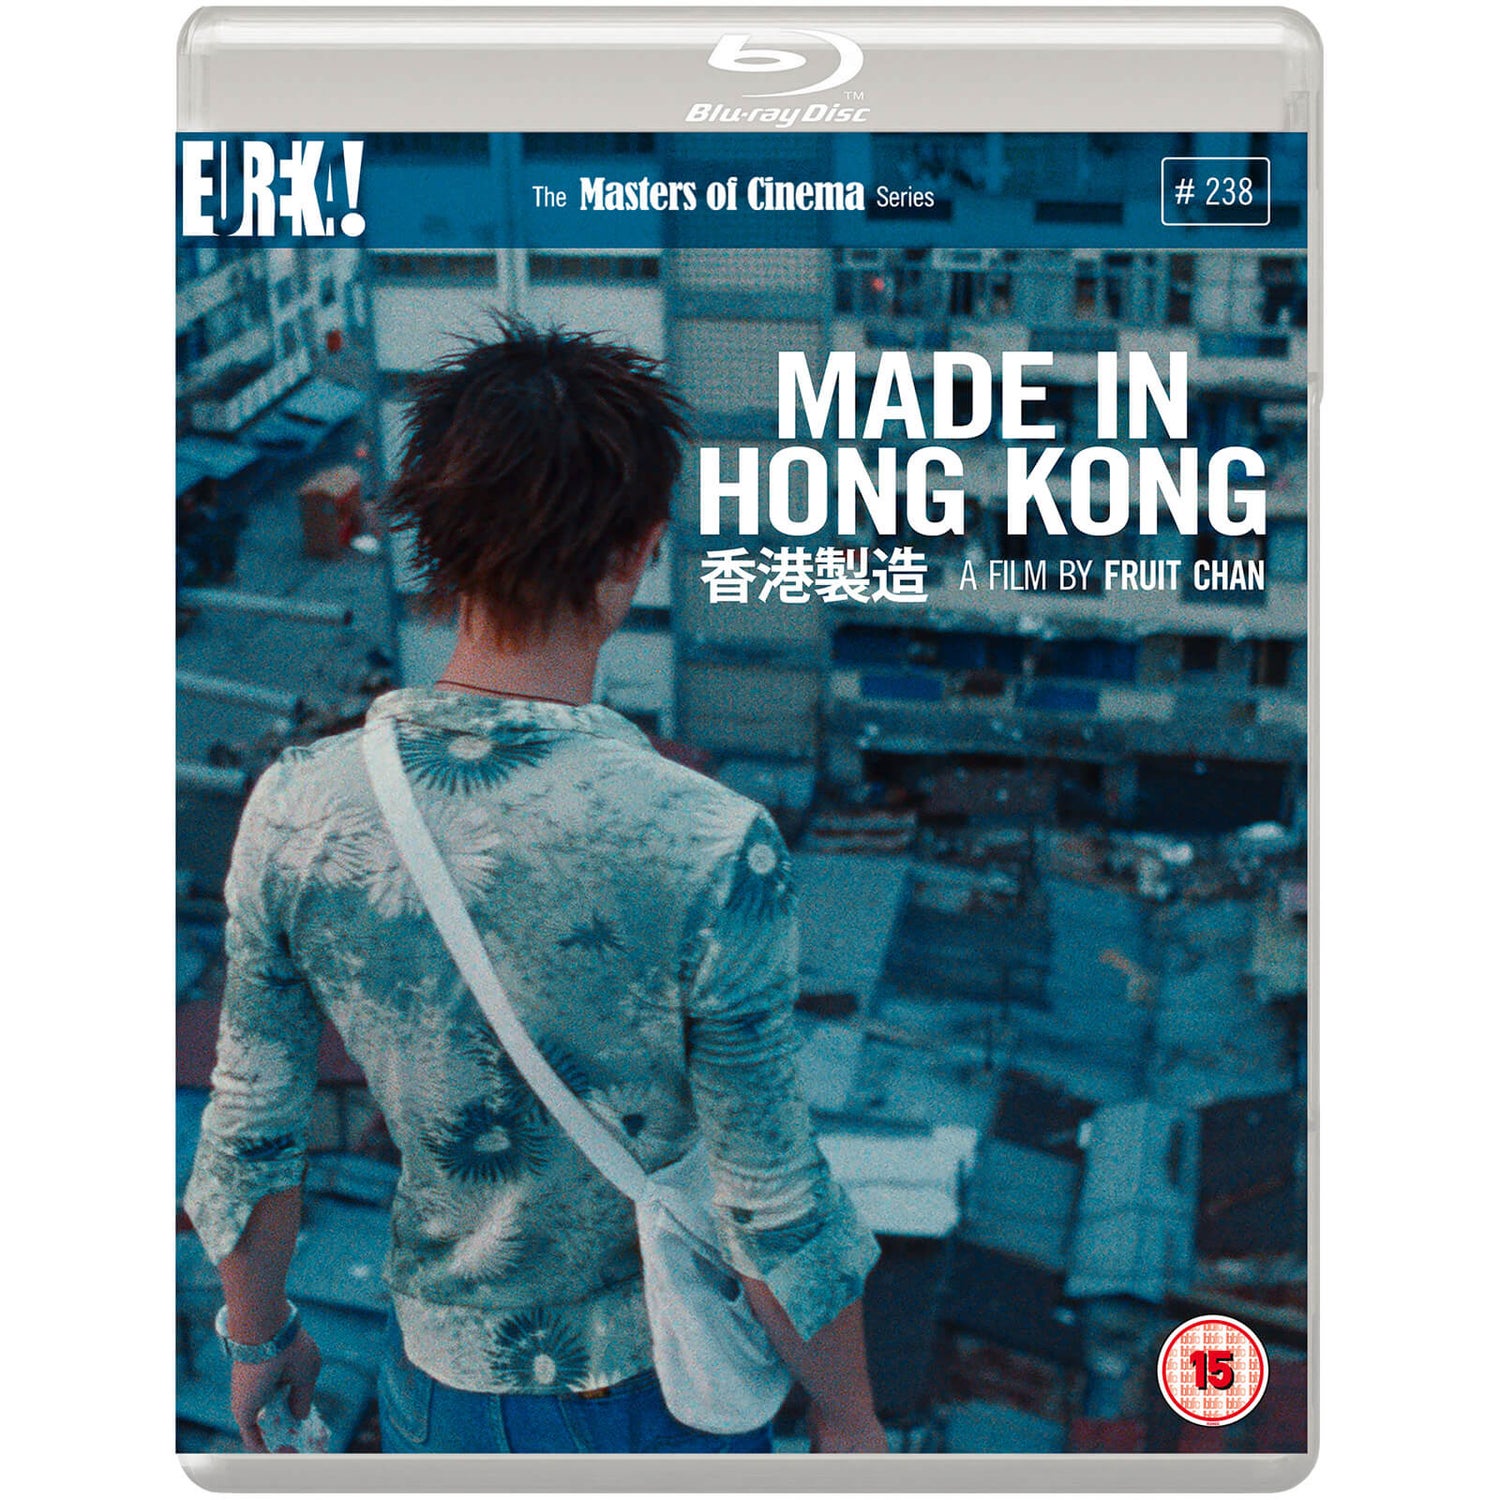 Made in Hong Kong (Maîtres de cinéma)